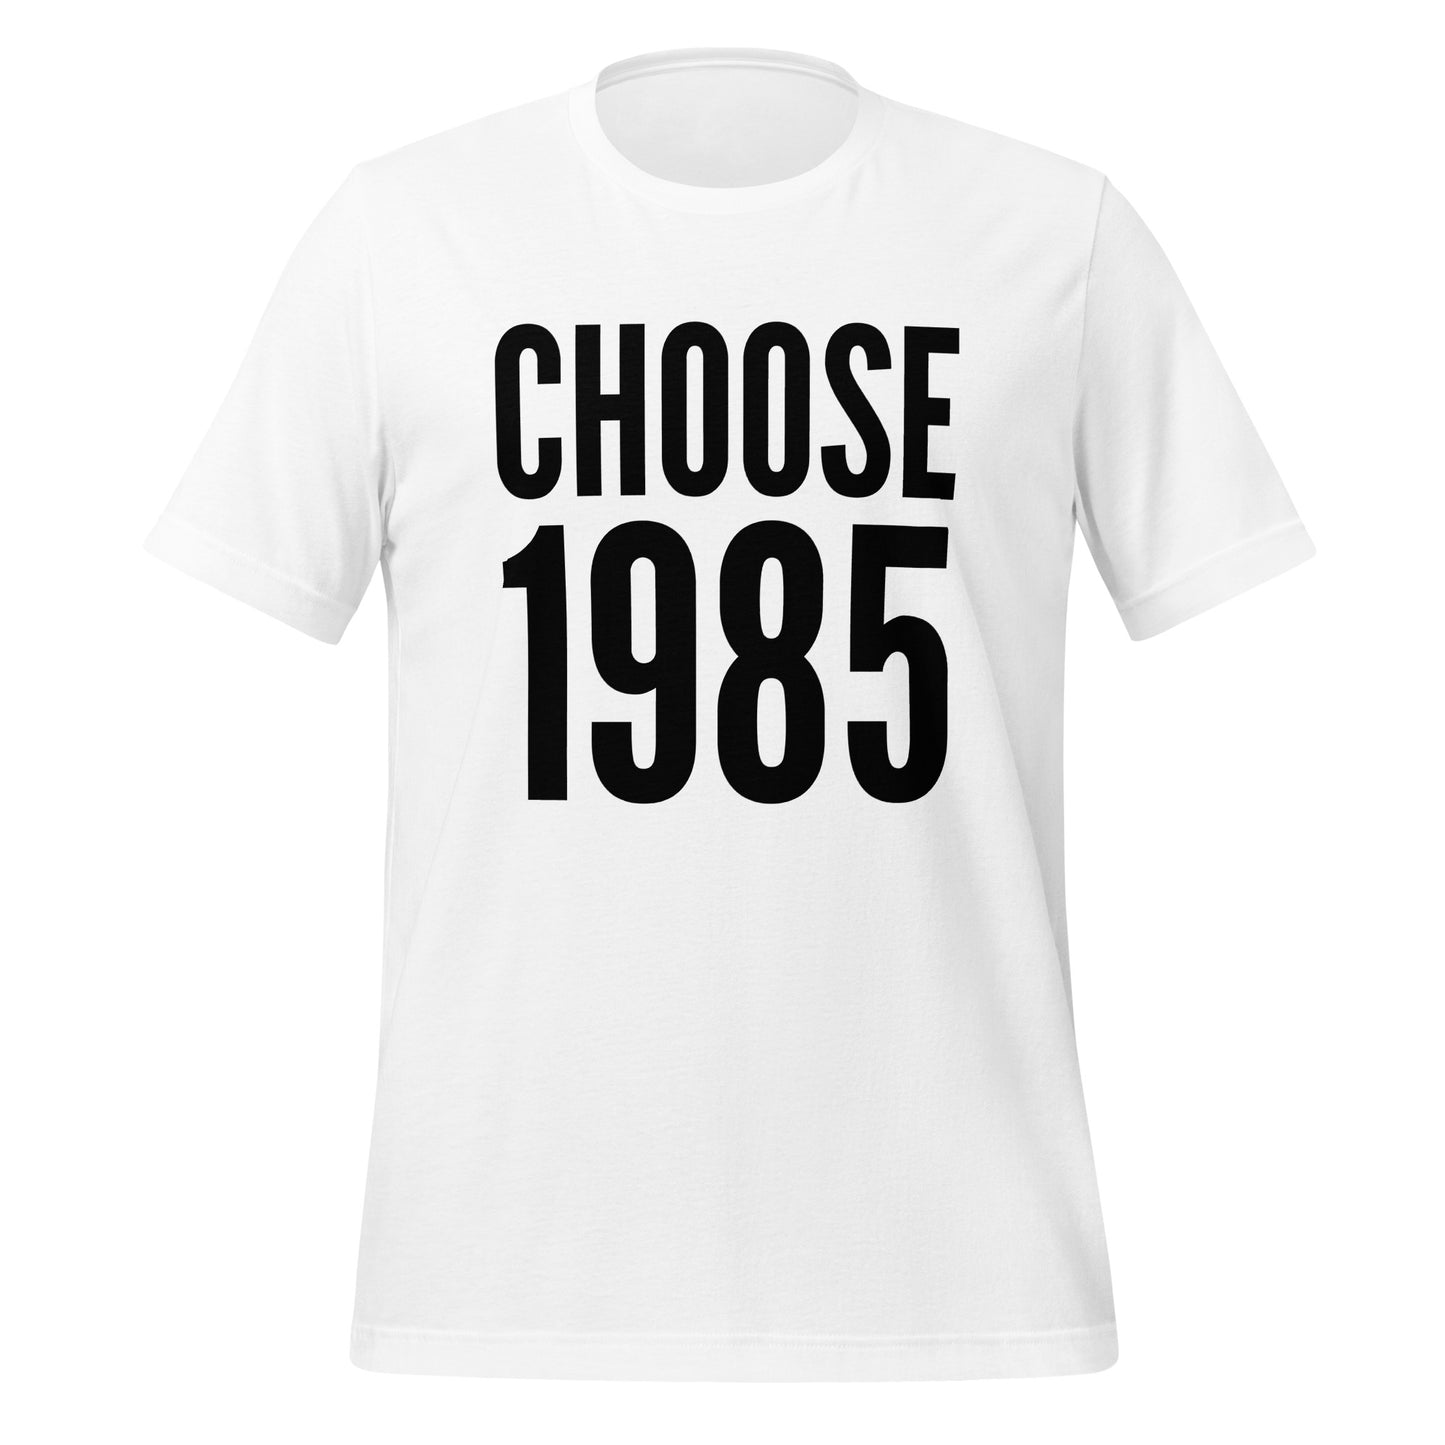 Choose 1985 - Unisex White T-Shirt